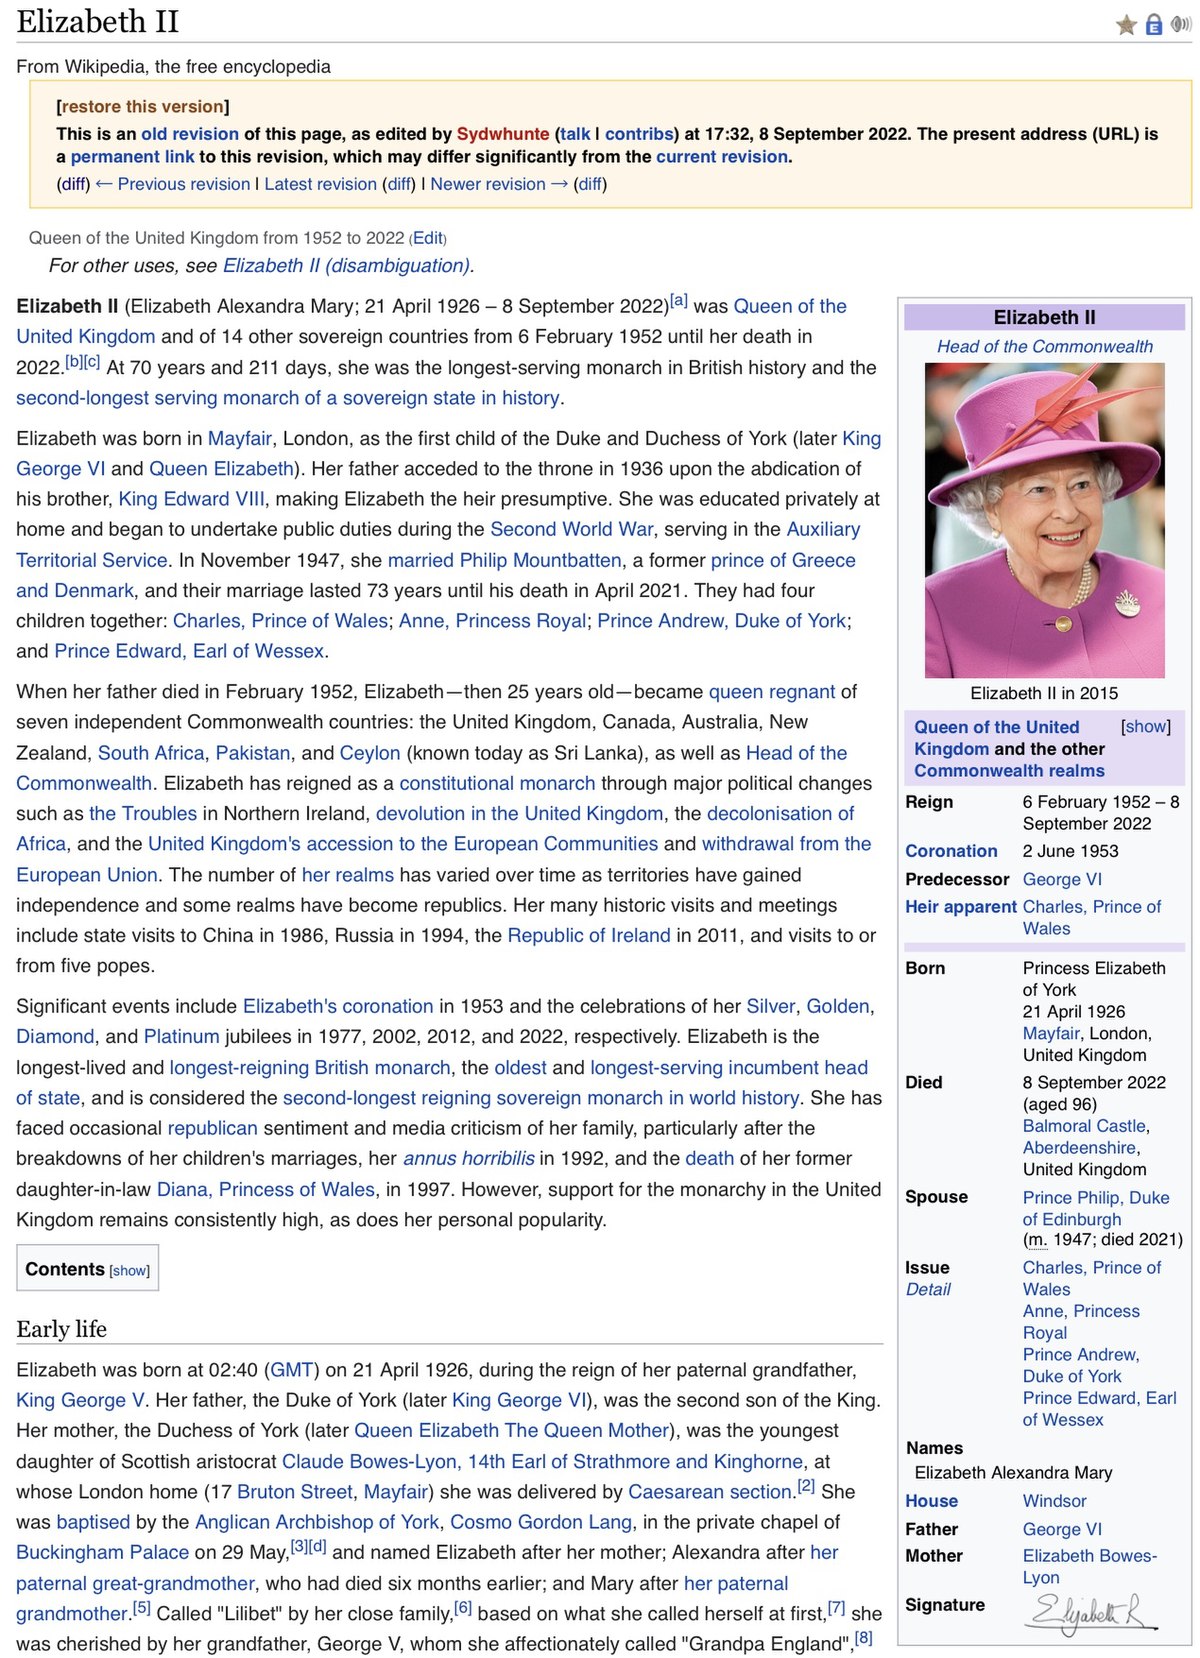 celebrity deaths wikipedia